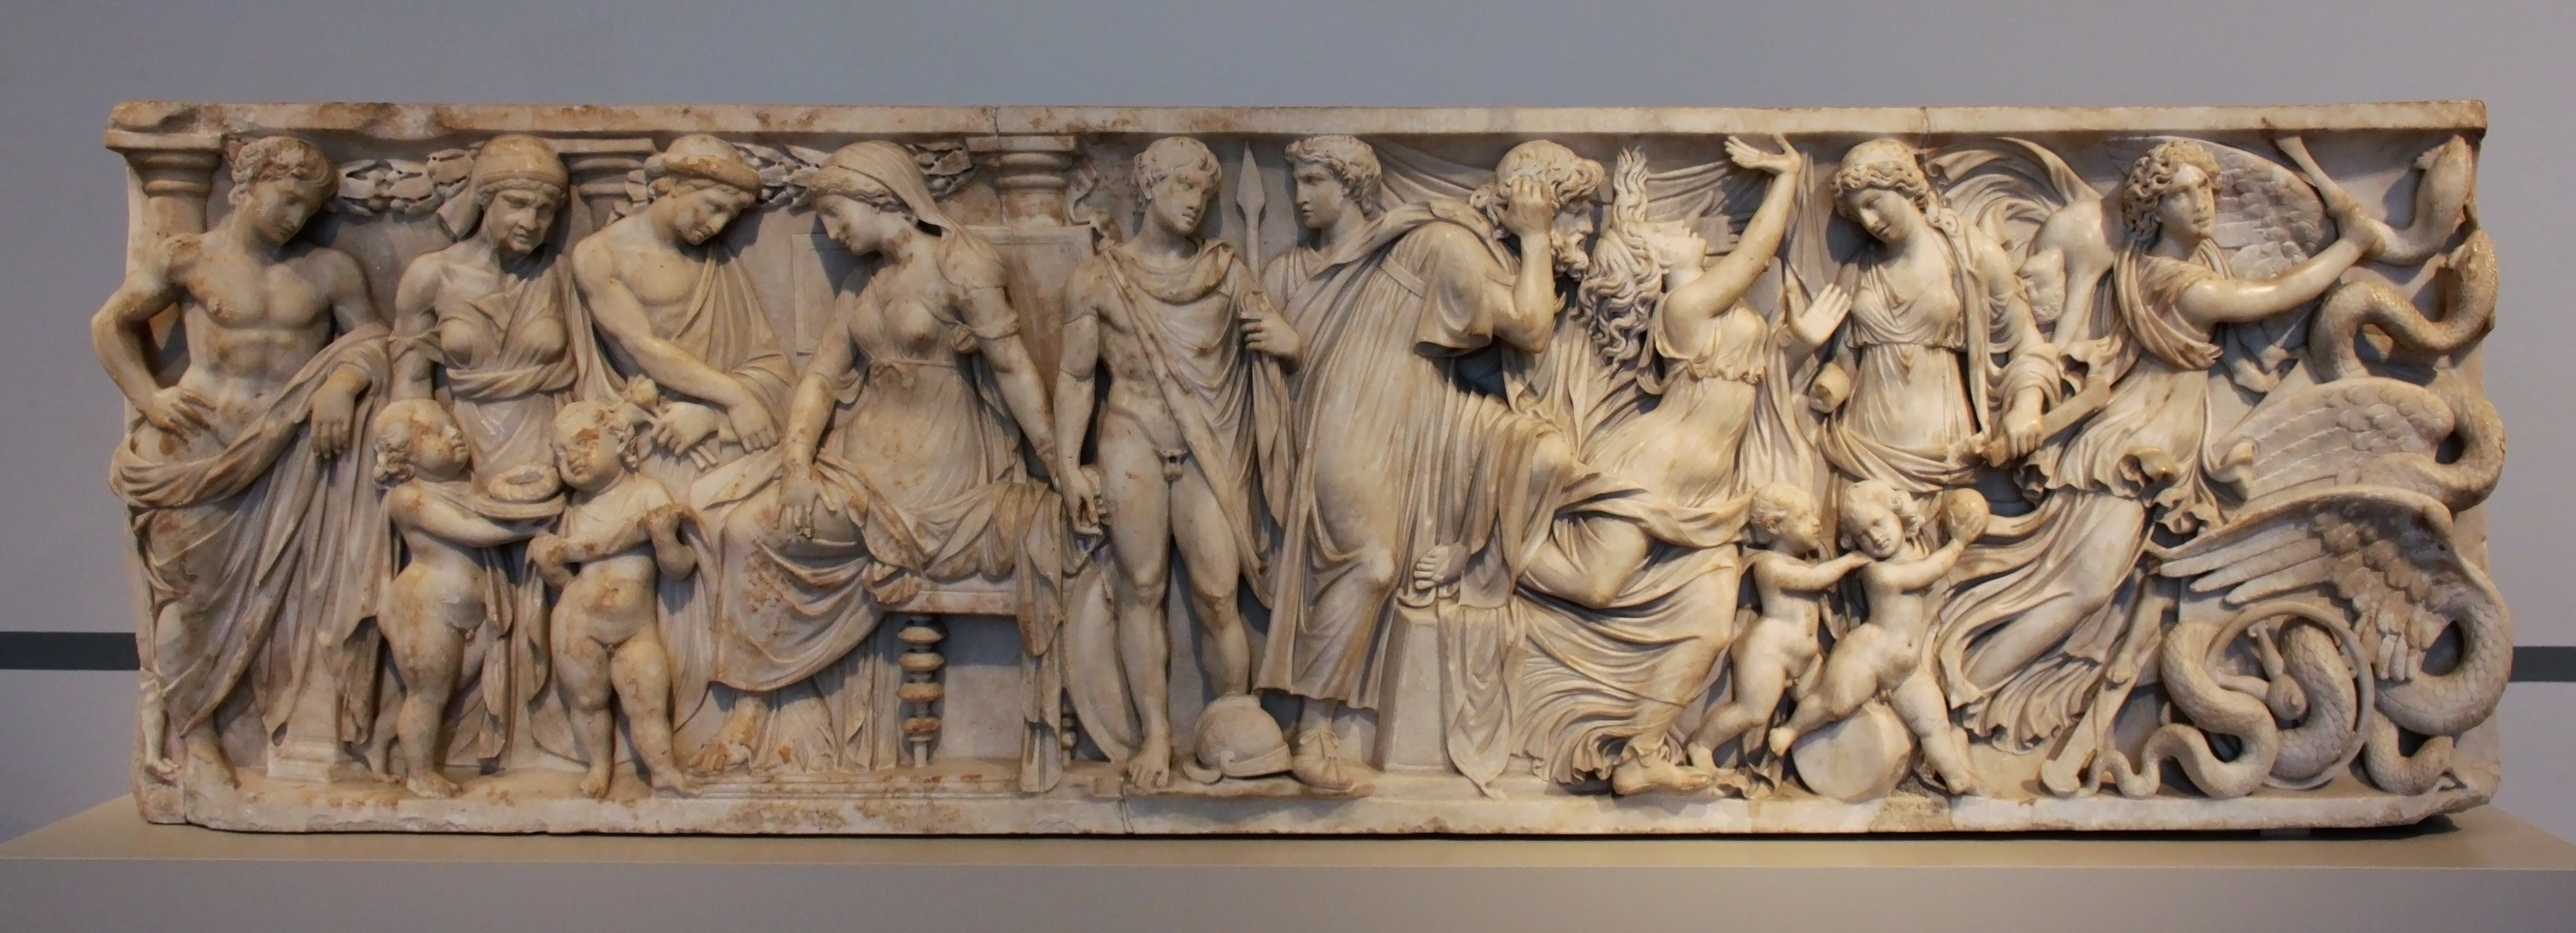 File:Medea Sarcophagus Berlin Altes Museum 01052018 1.jpg - Wikimedia  Commons